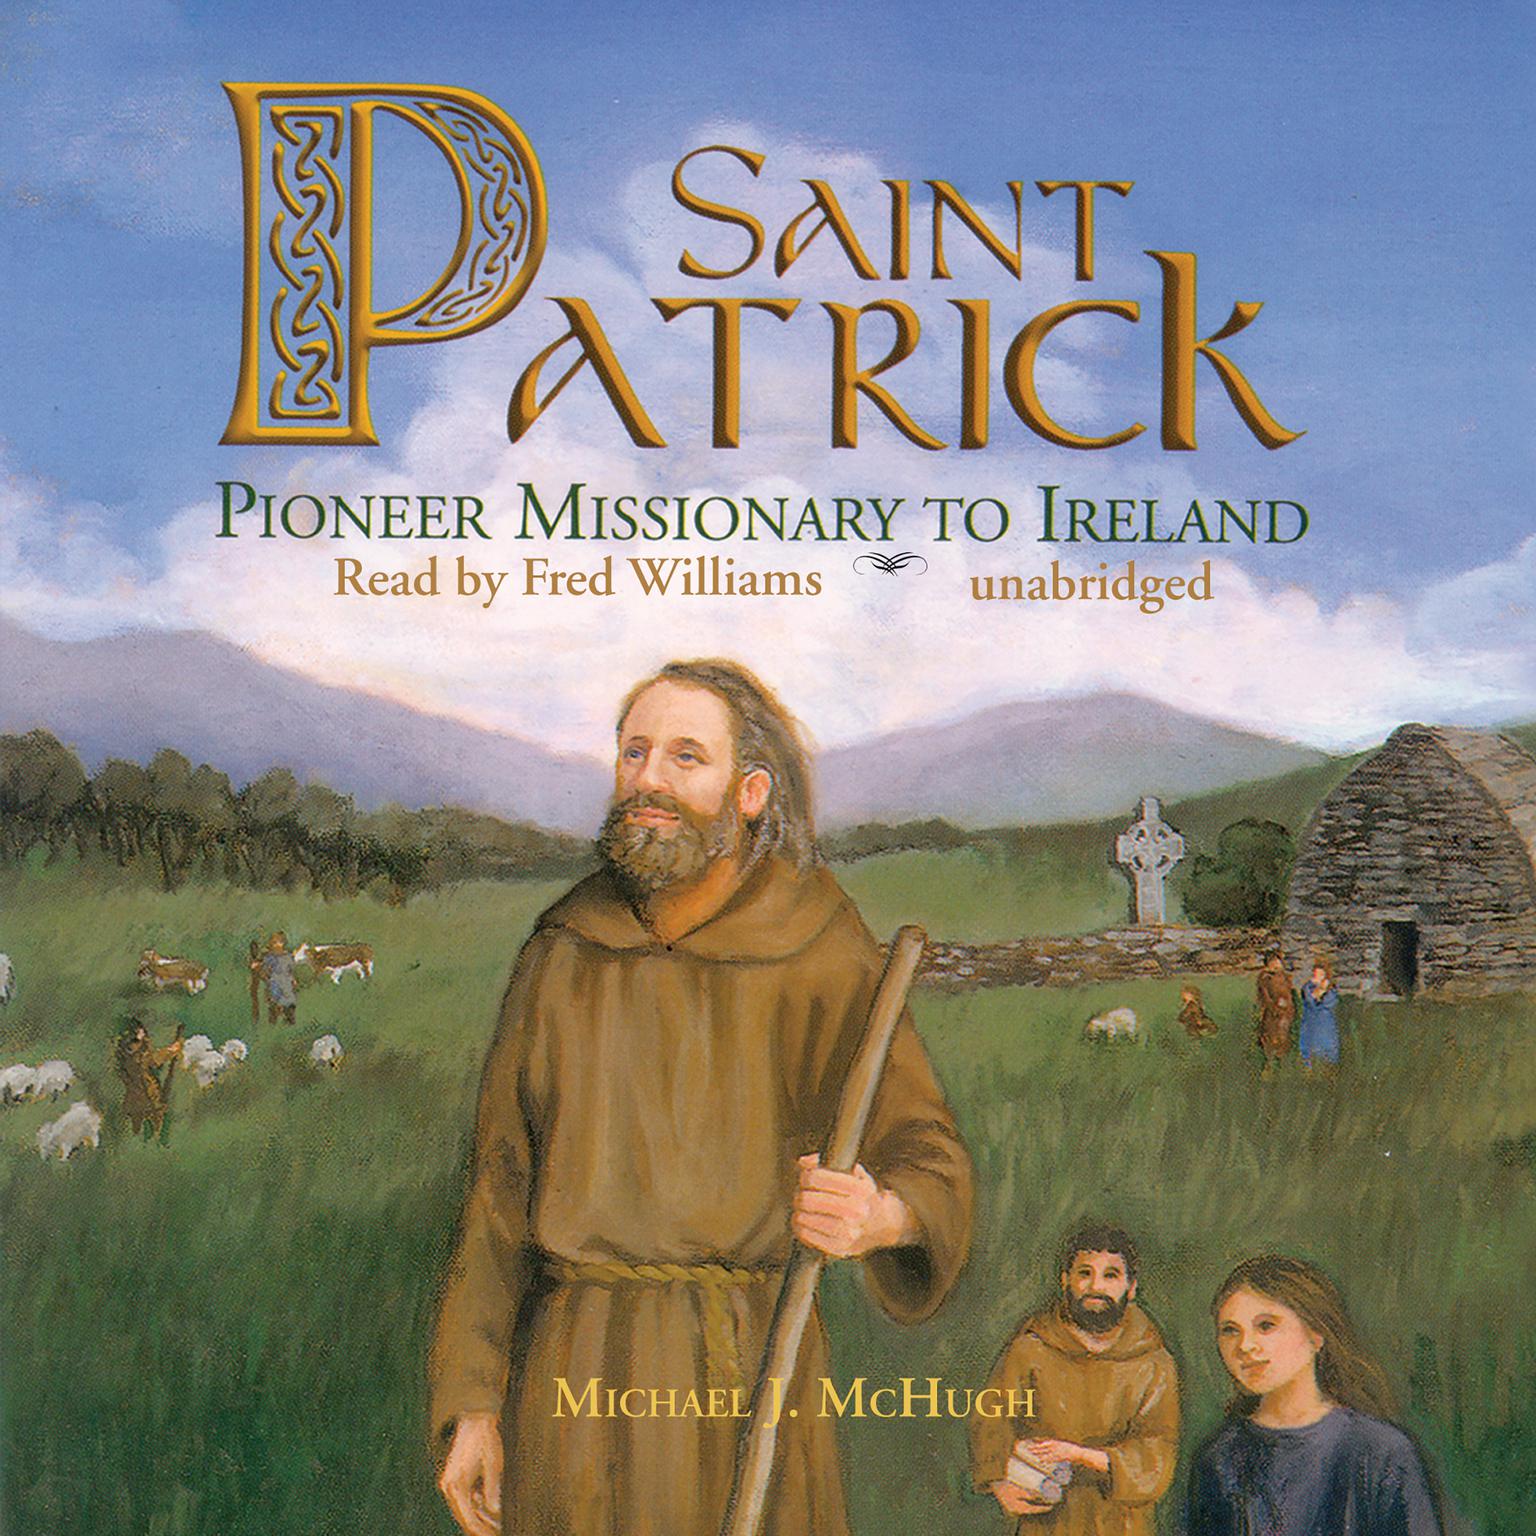 Saint Patrick: Pioneer Missionary to Ireland Audiobook, by Michael J. McHugh